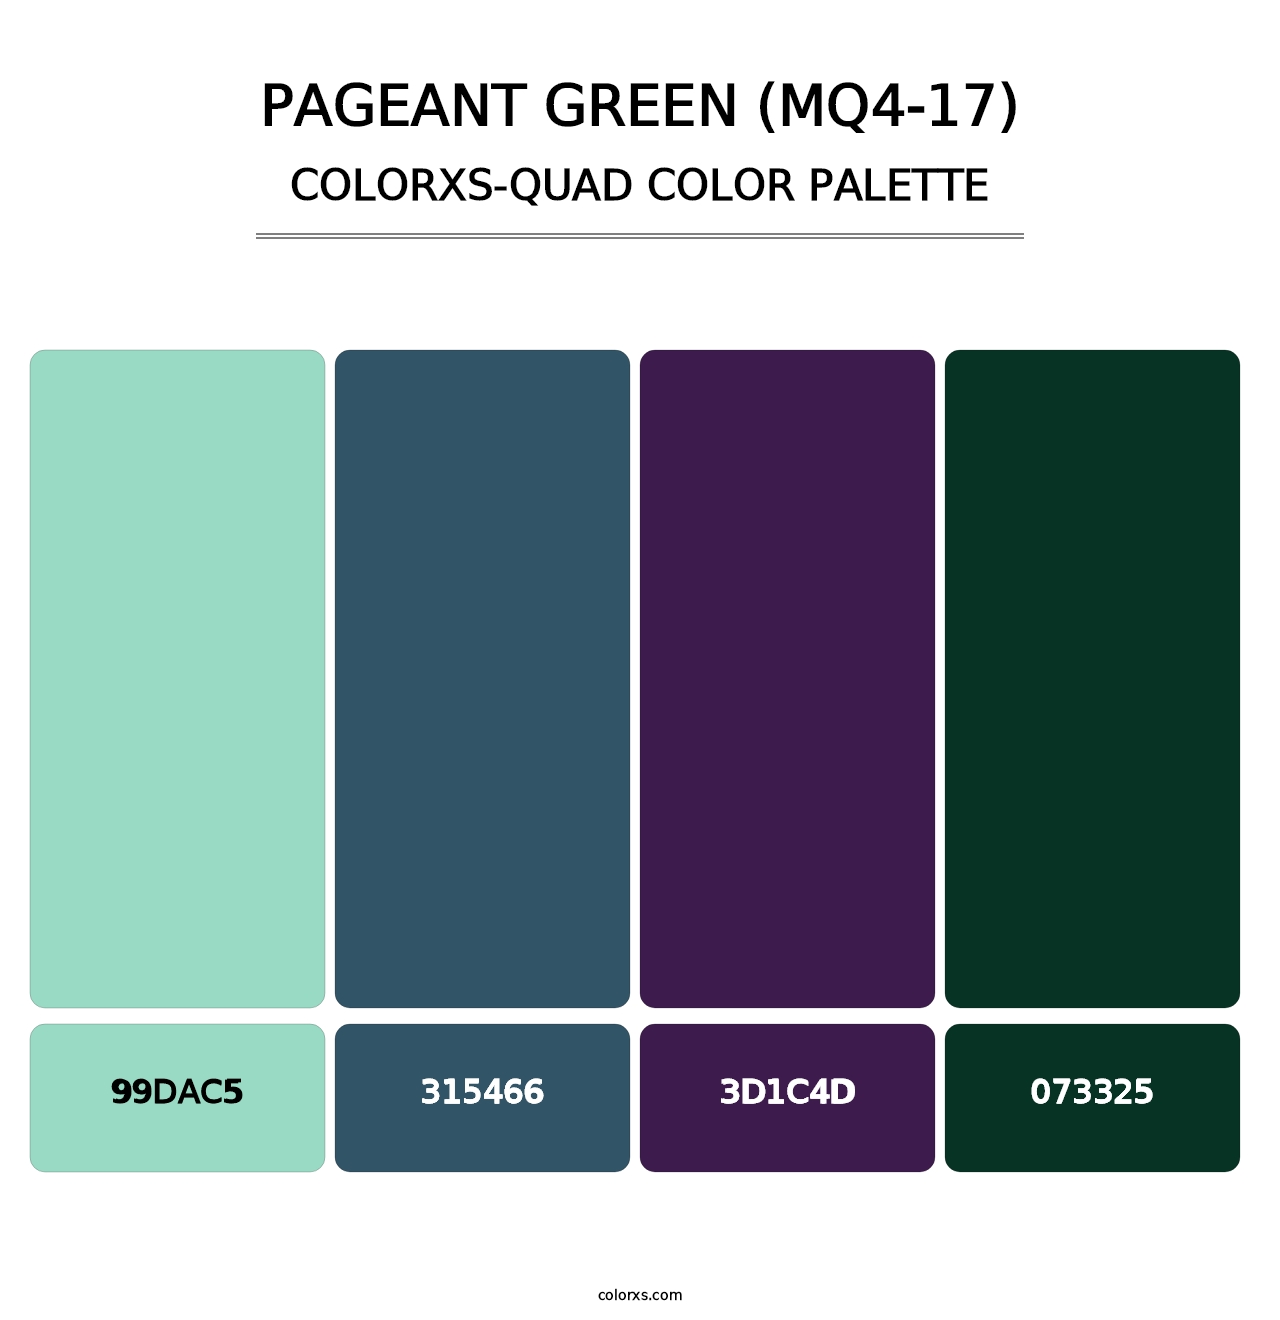 Pageant Green (MQ4-17) - Colorxs Quad Palette